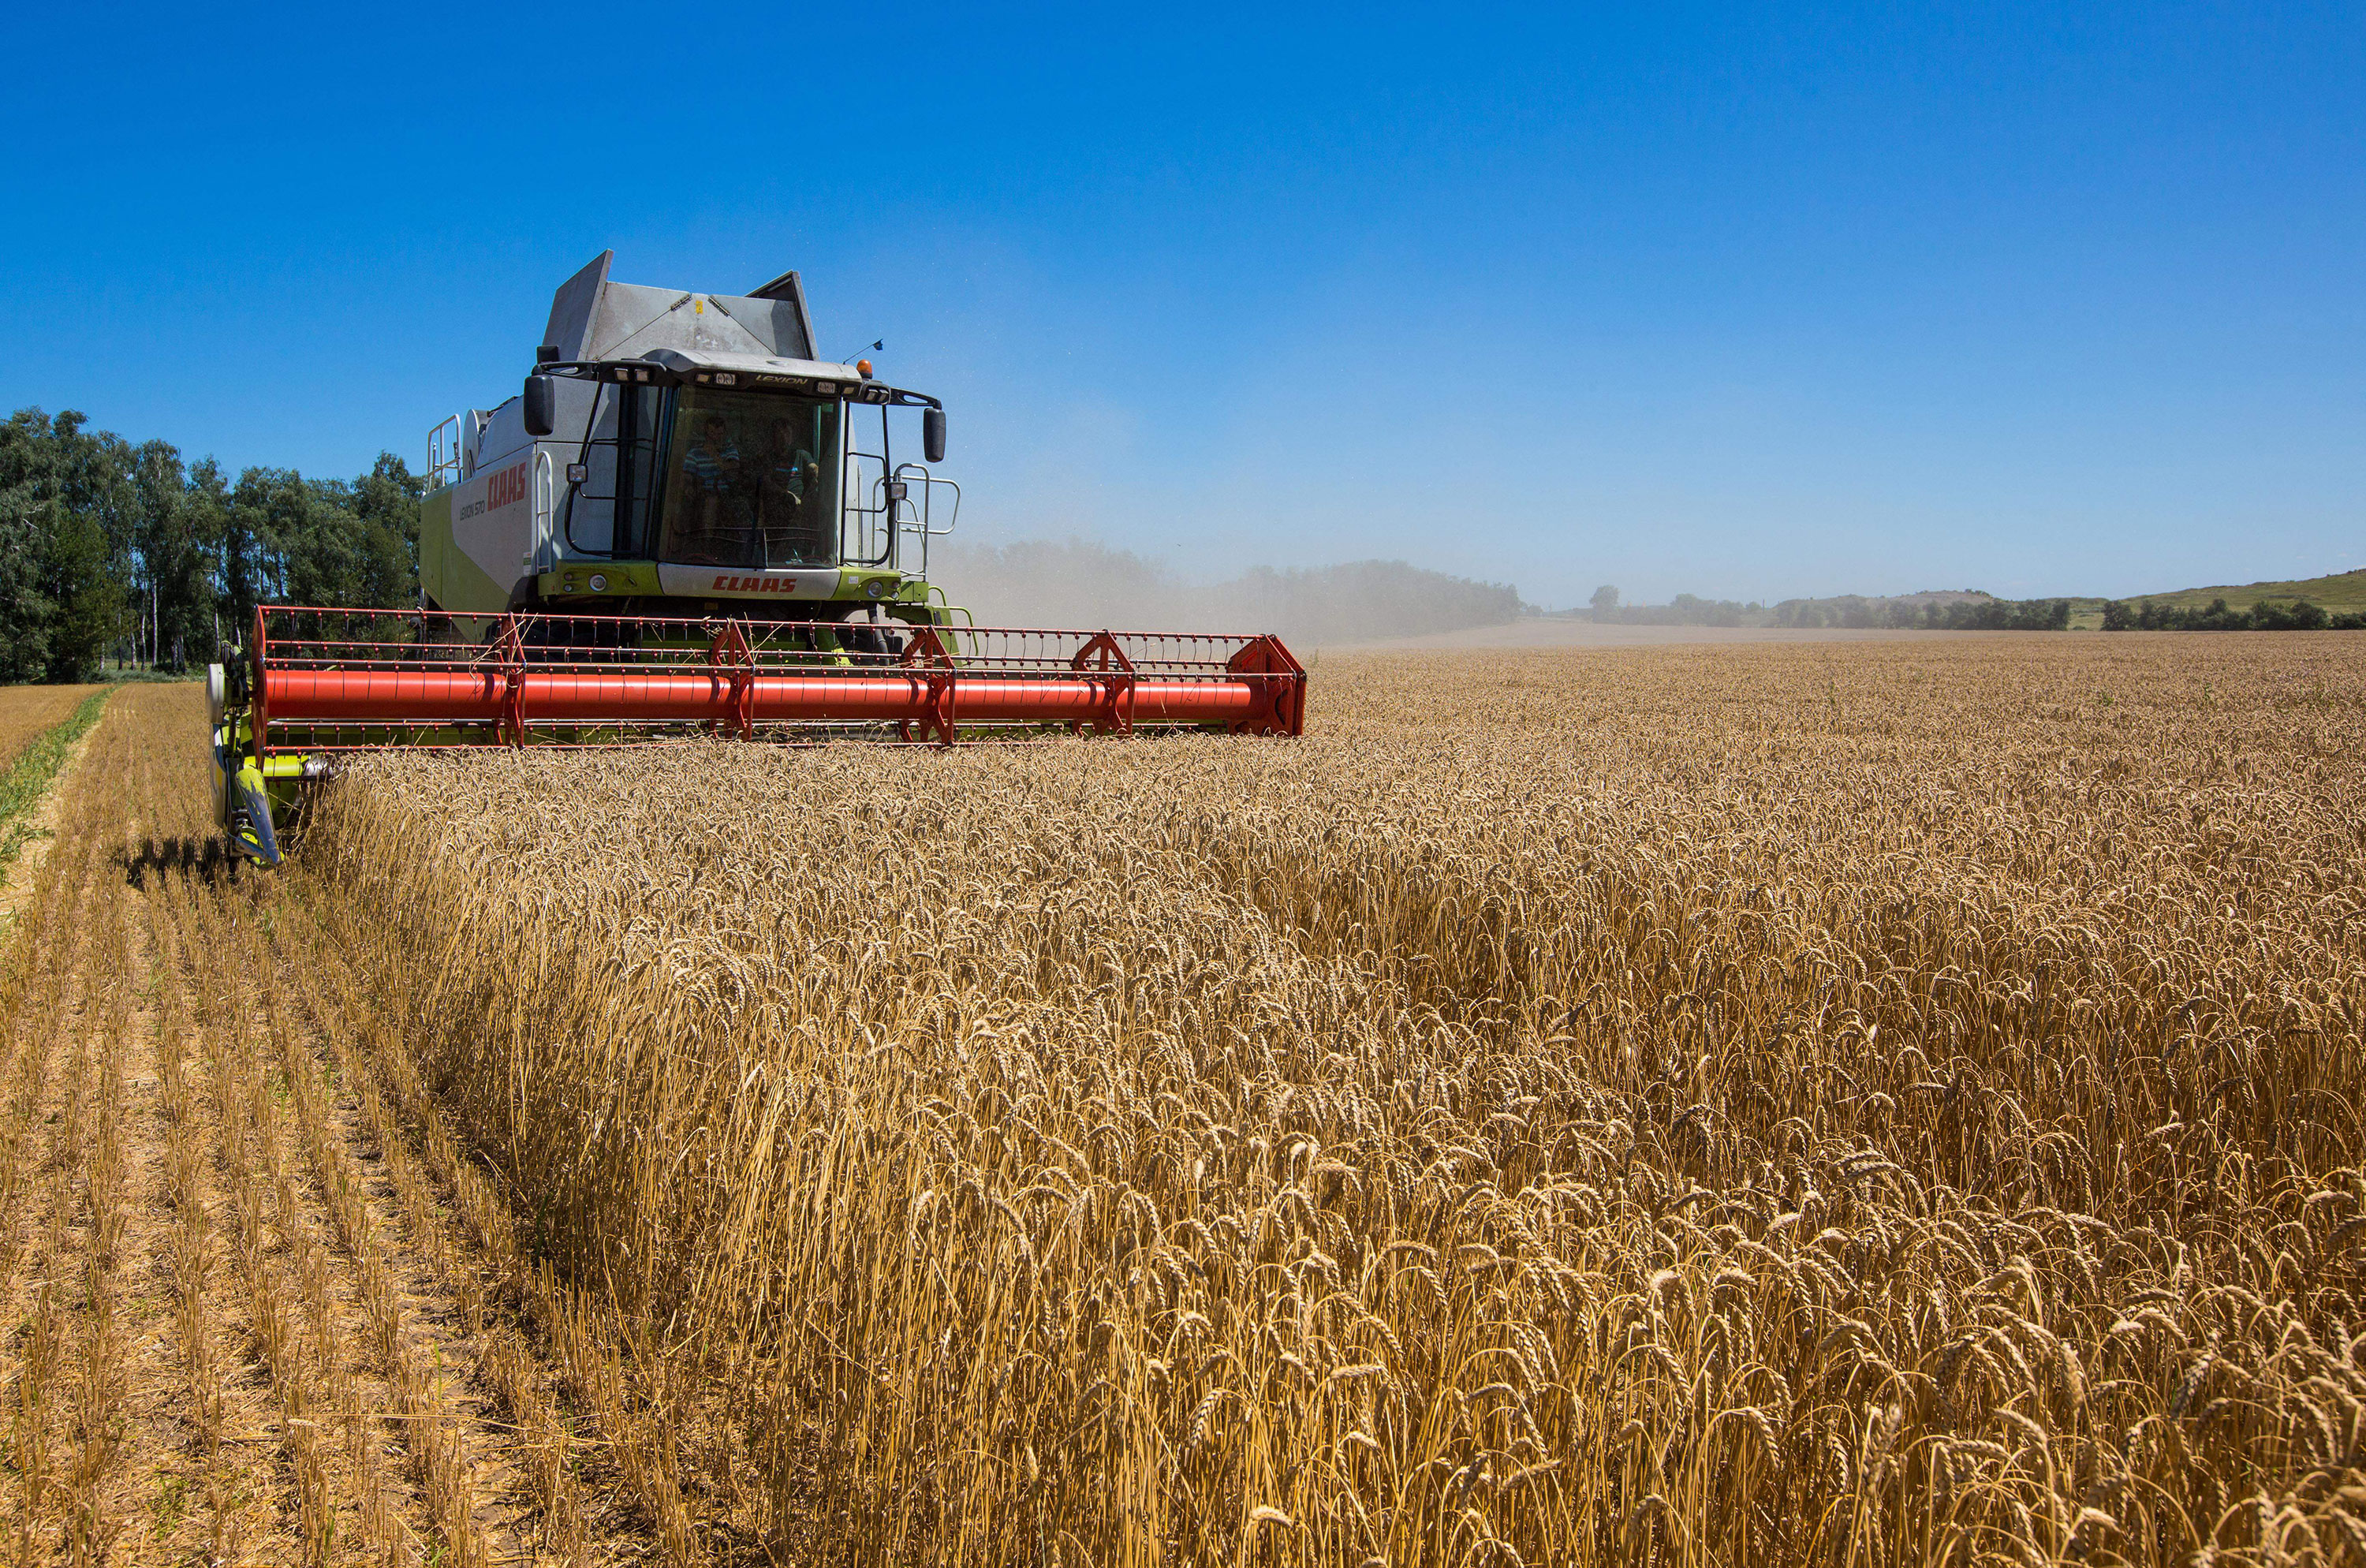 Wheat is harvested in the Khmelnytskyi region of Ukraine in 2013.